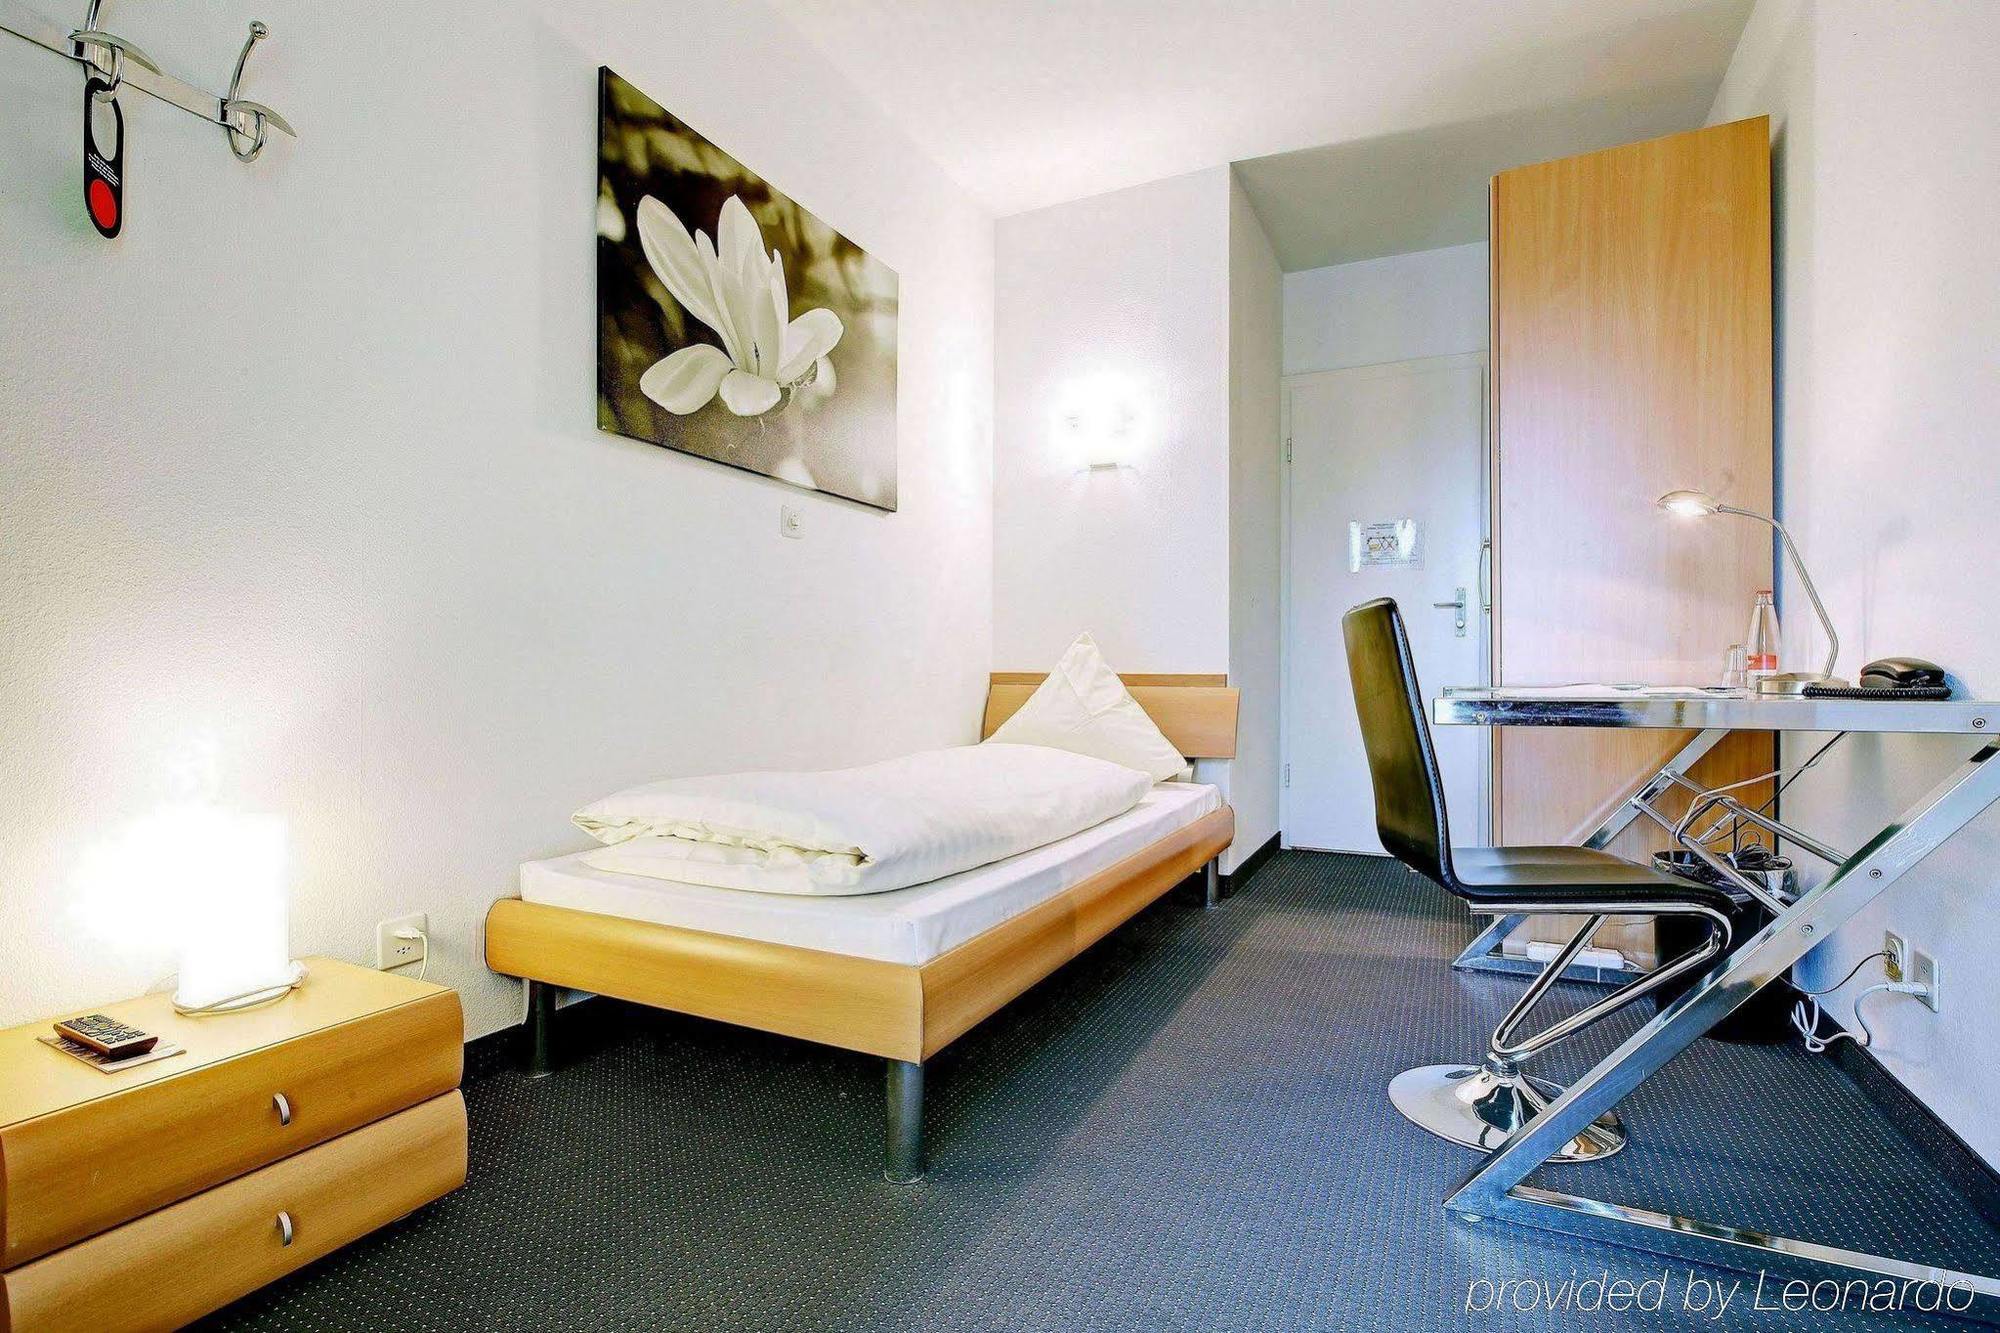 Balegra City Hotel Basel Contactless Self Check-In Esterno foto